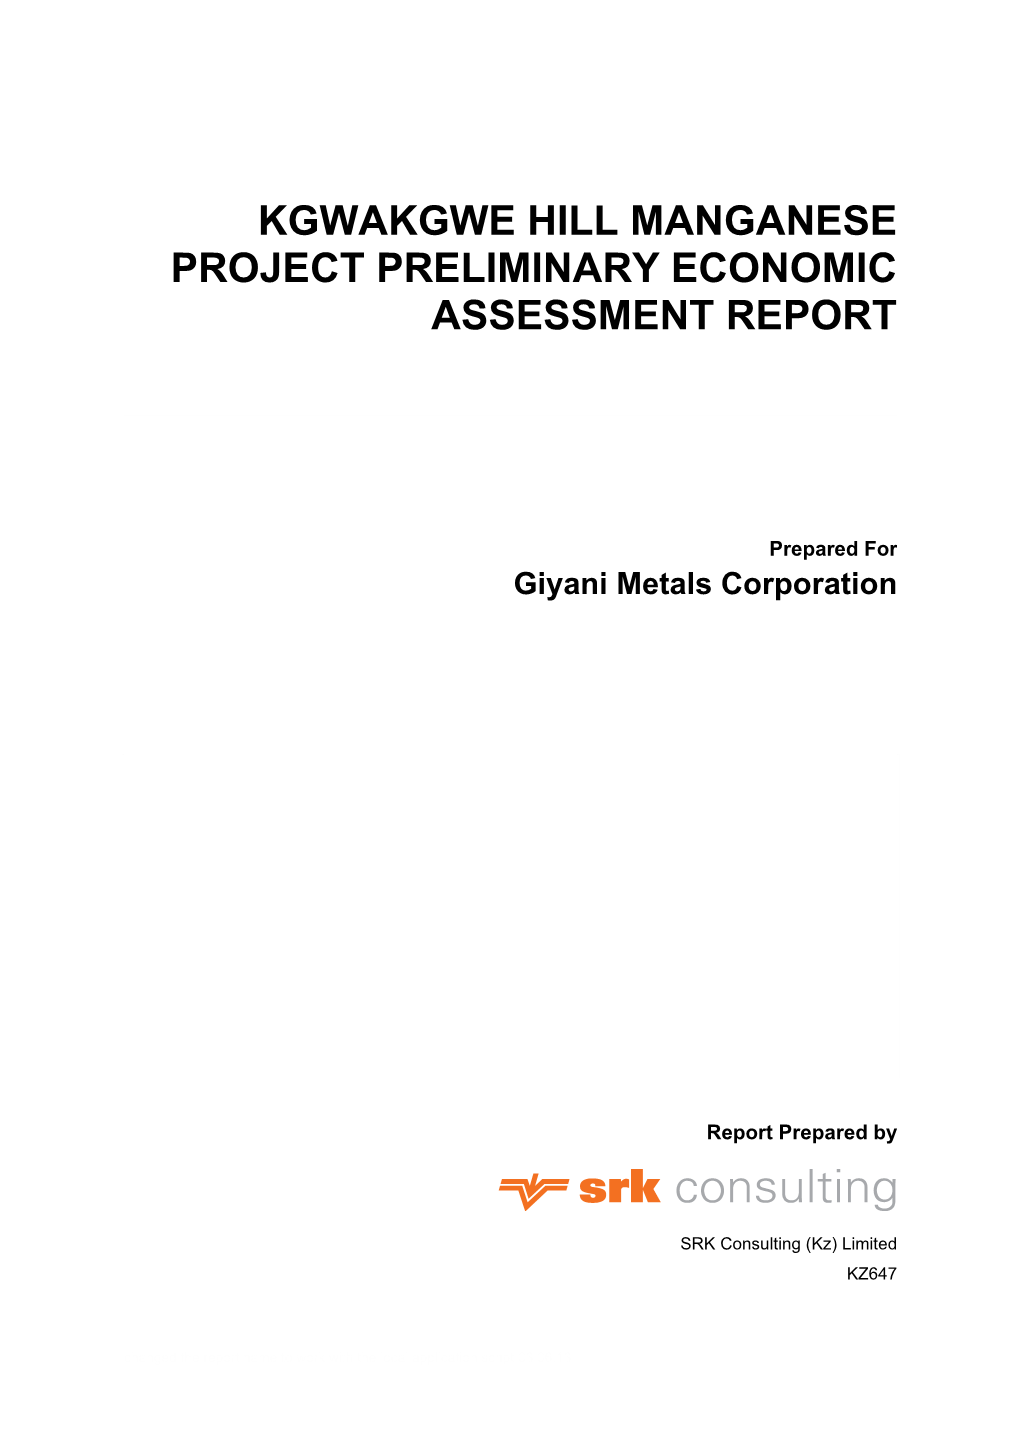 Kgwakgwe Hill Manganese Project Preliminary Economic Assessment Report